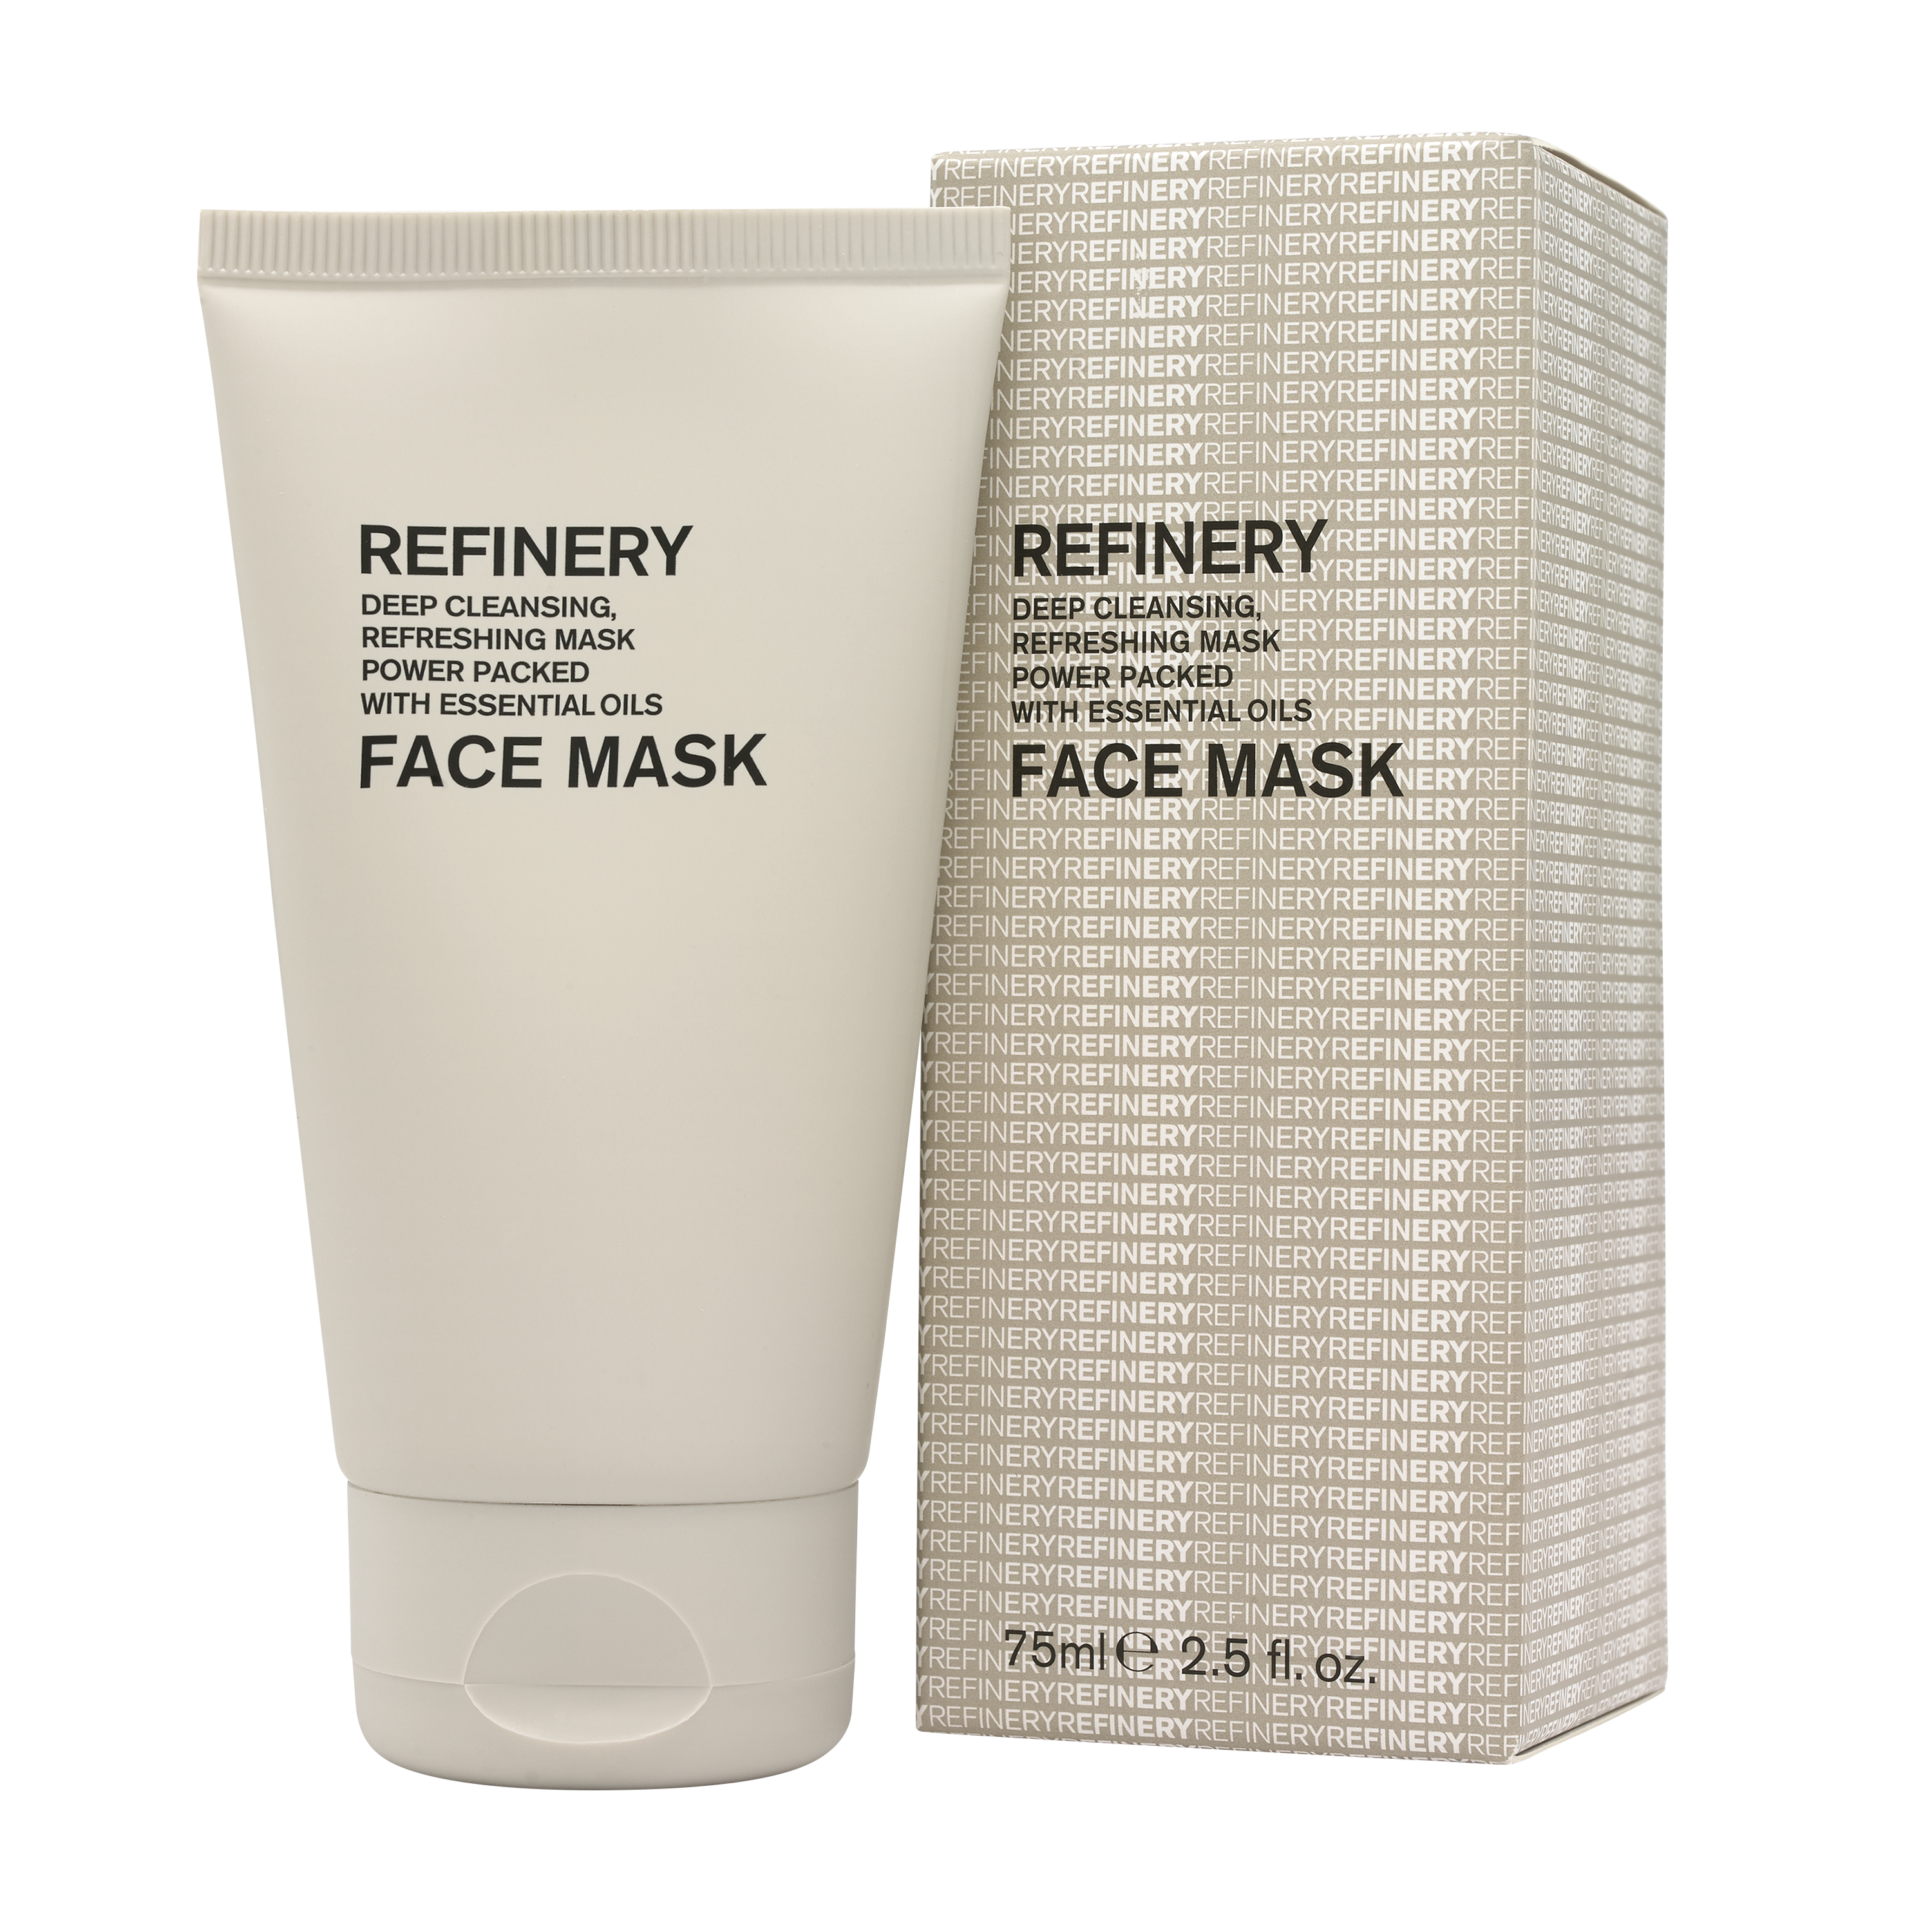 Refinery Face Mask Aromatherapy Associates